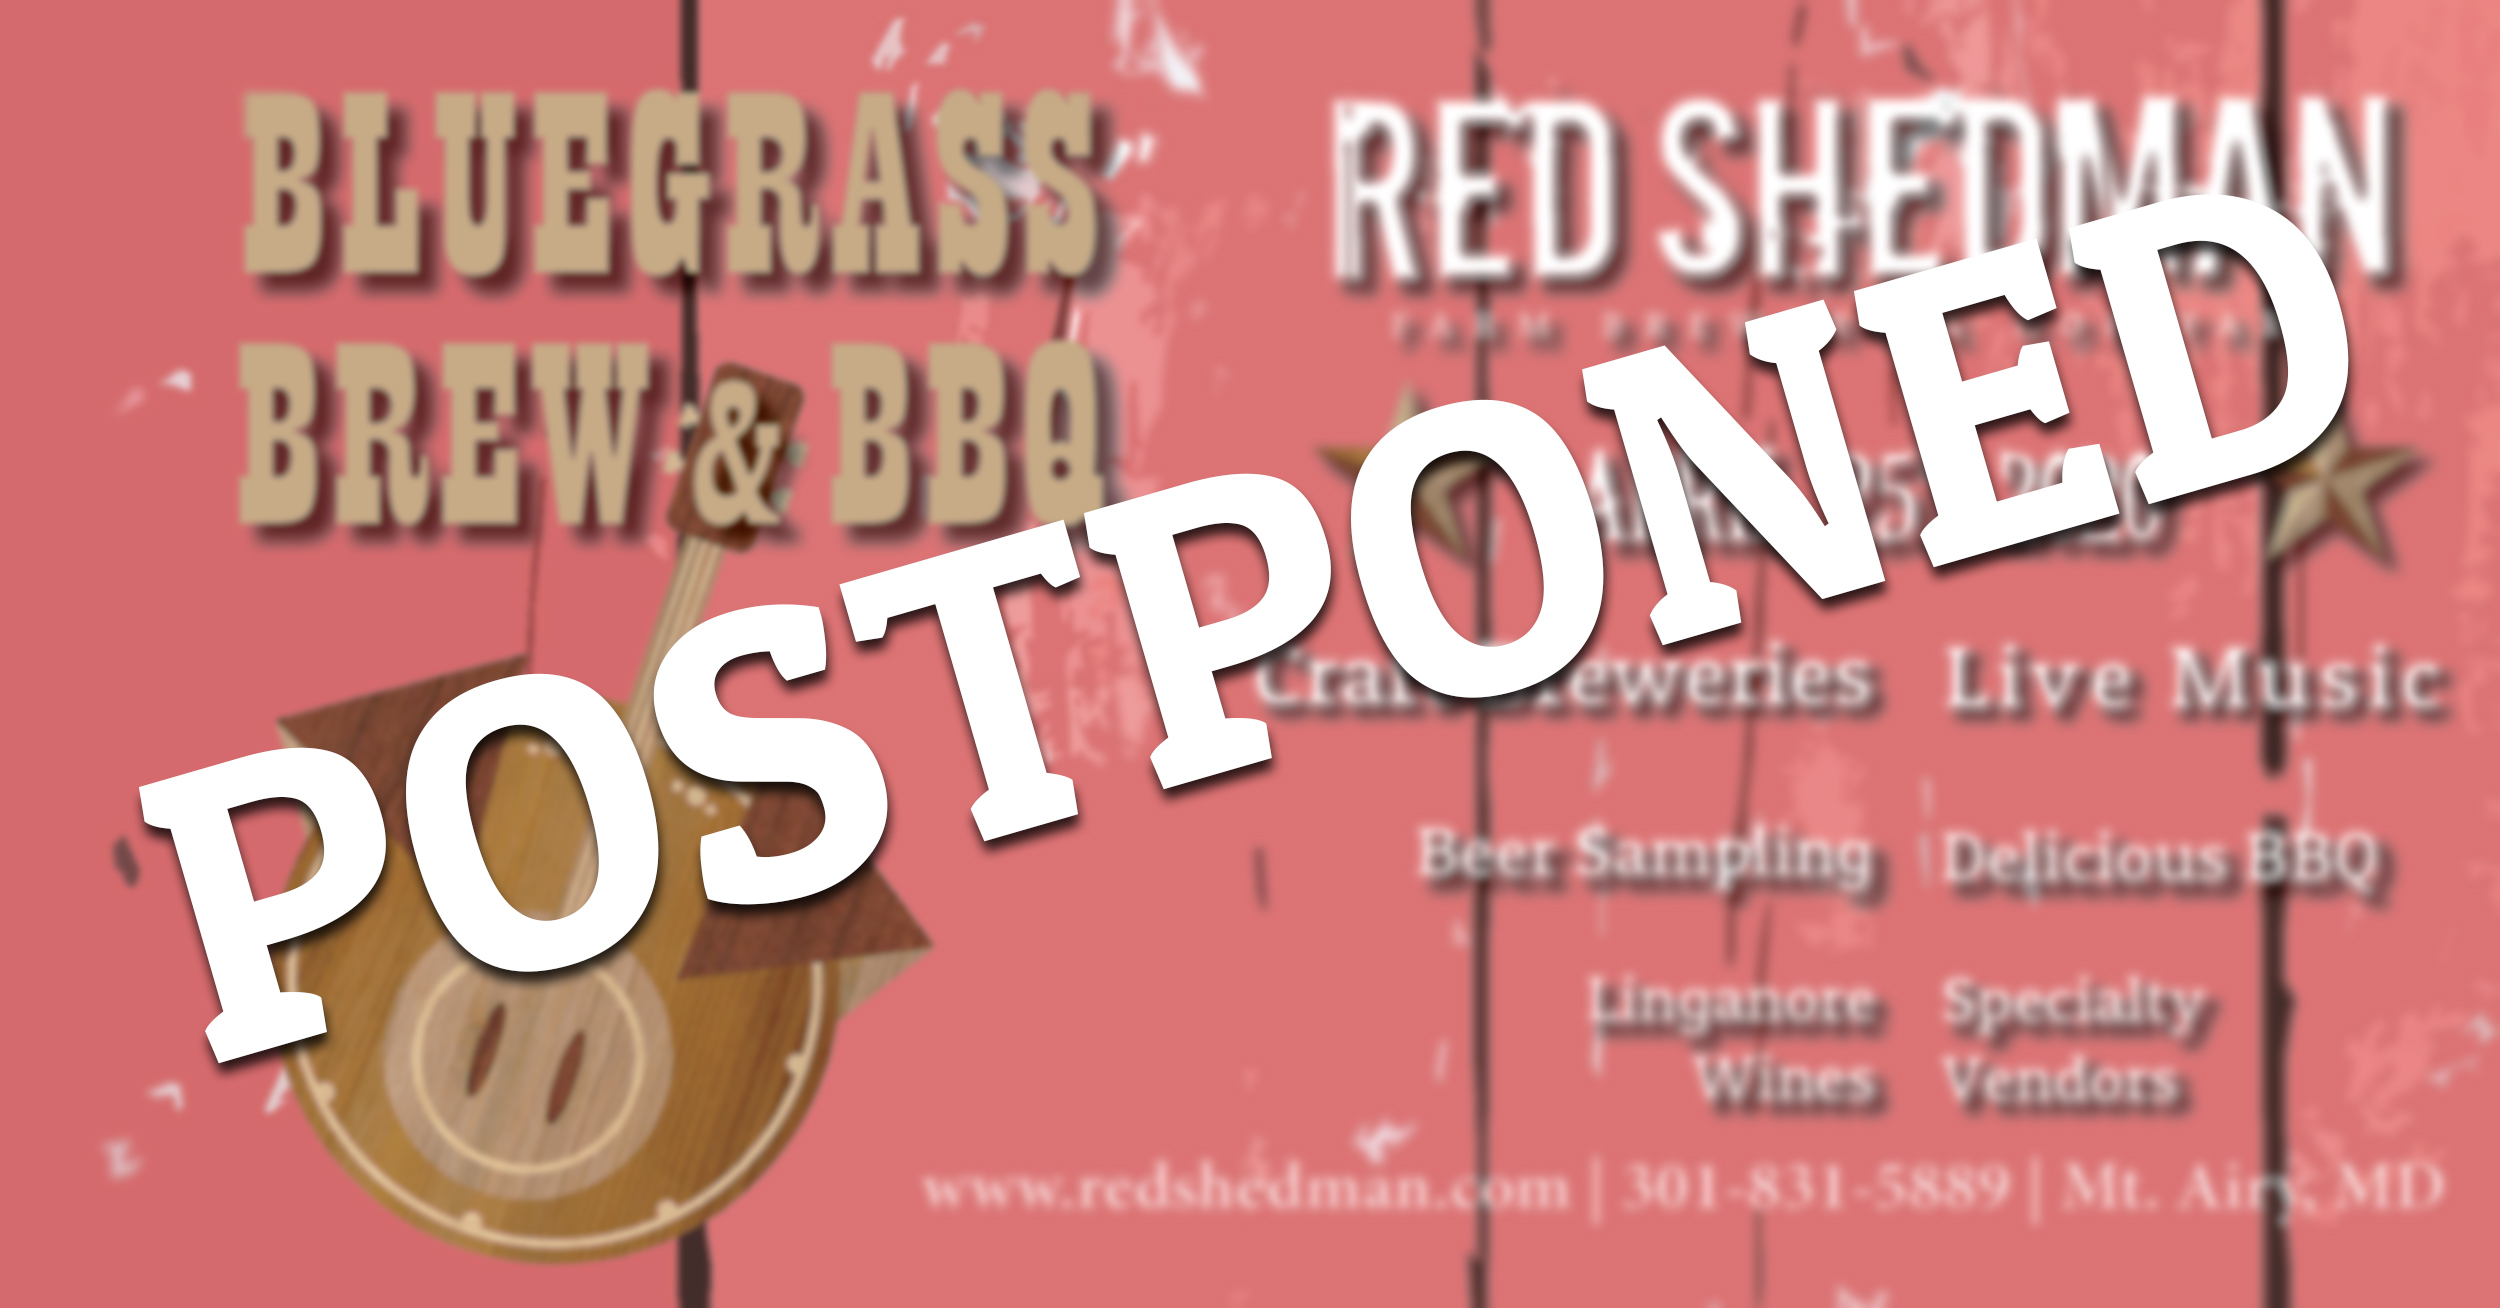 bluegrass brew and bbq postponed announcement